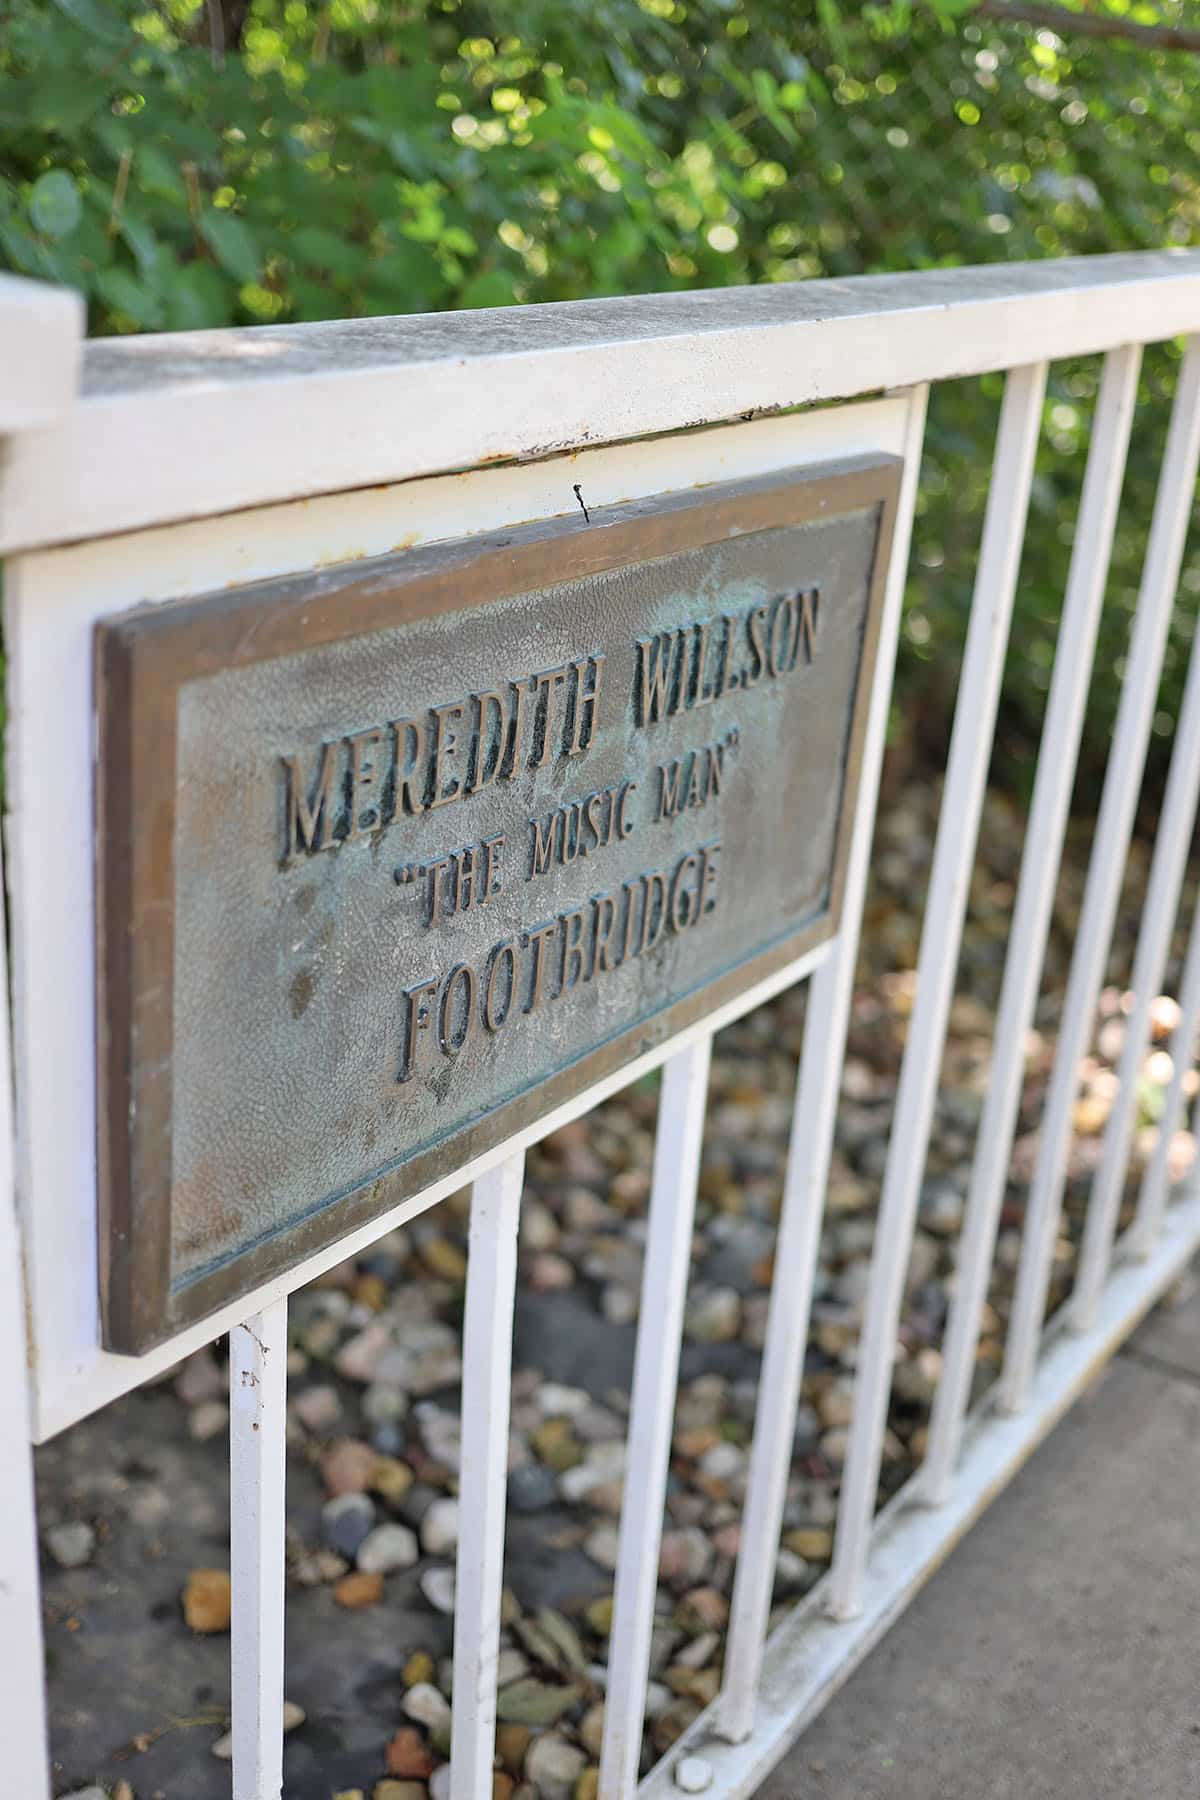 Sign noting Meredith Willson's footbridge.